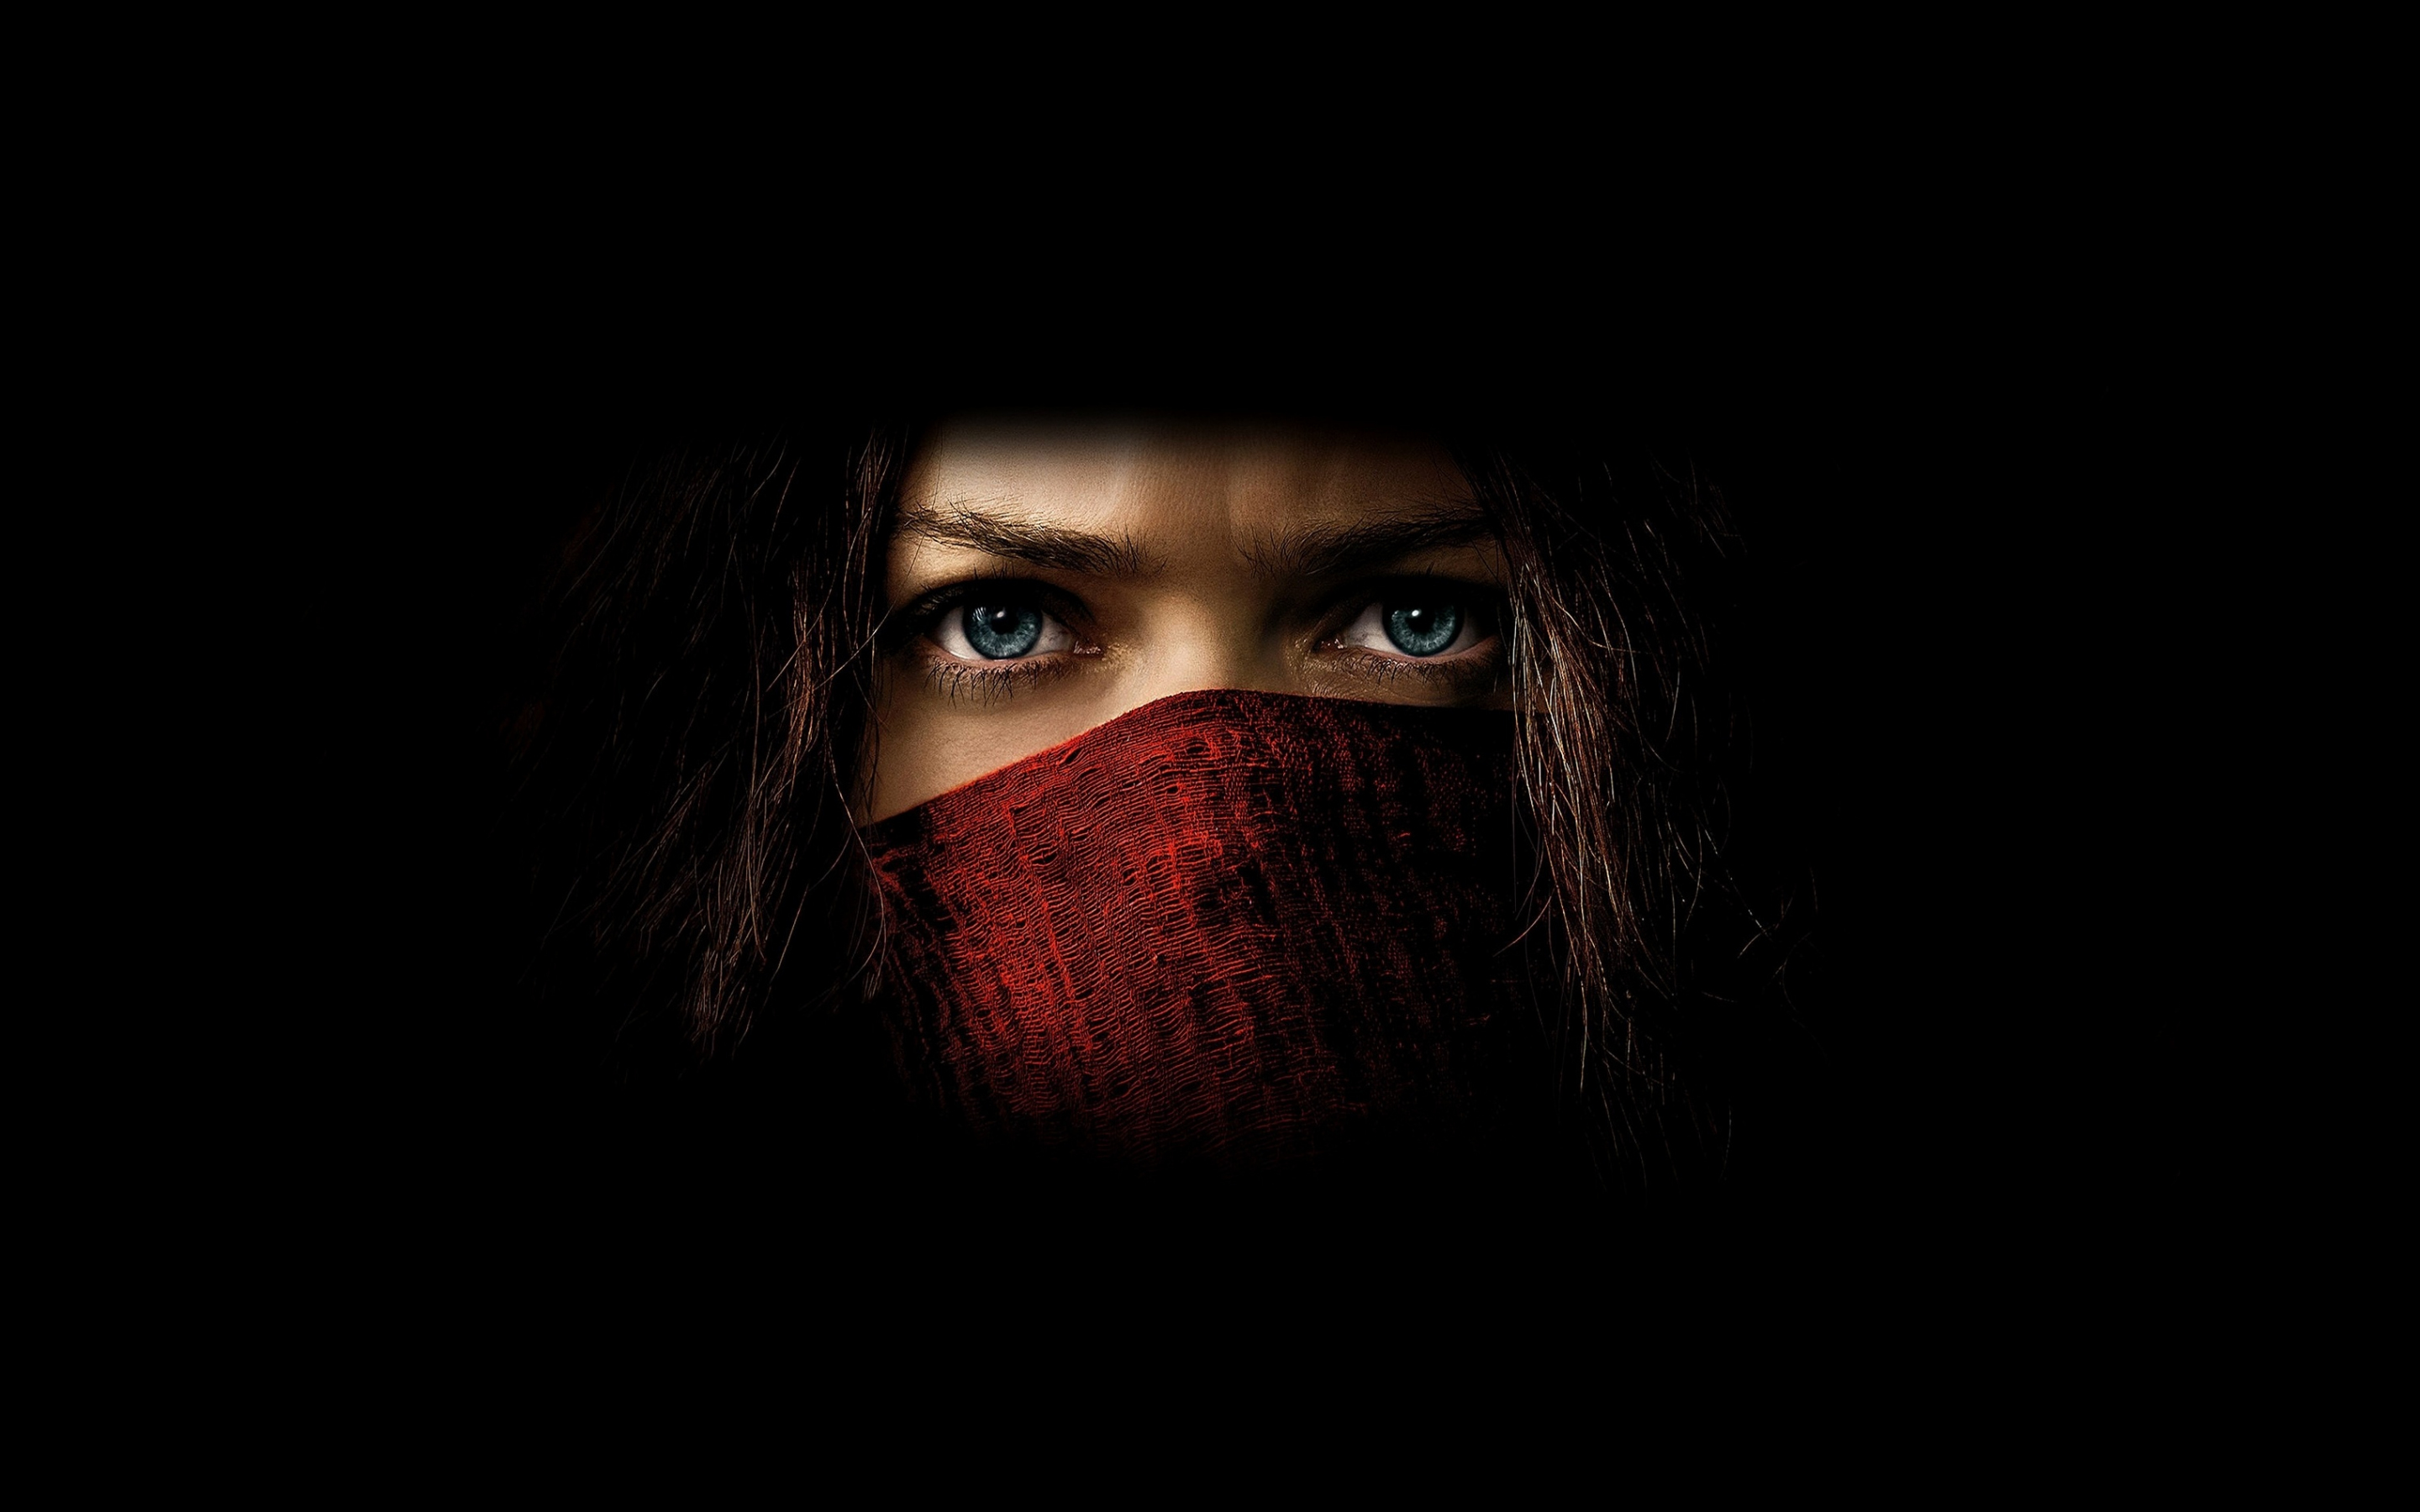 Woman behind mask, Mortal Engines, 2018 movie, 2880x1800 wallpaper